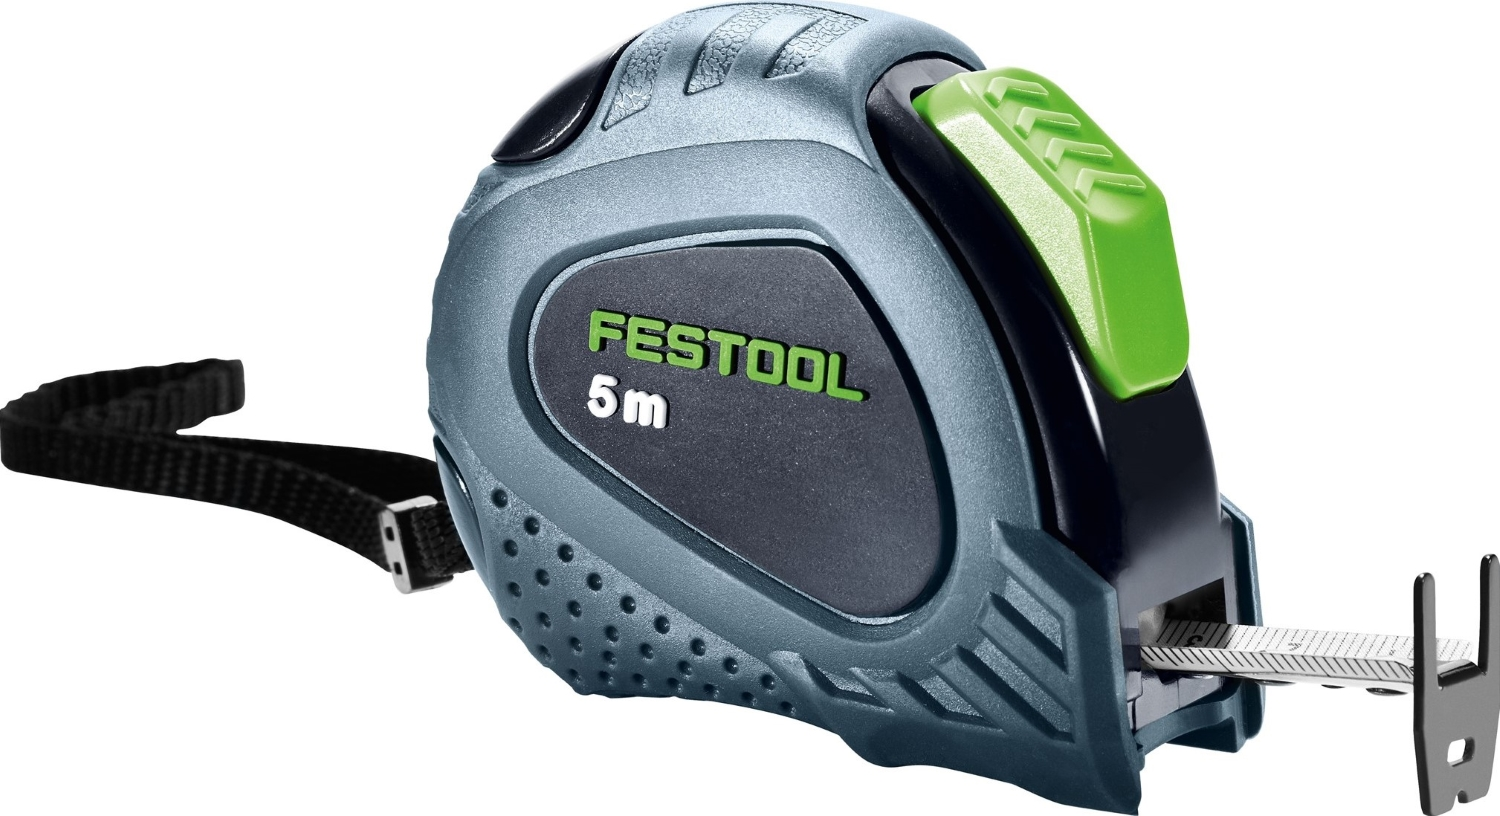 Festool MB 5m - Mètre ruban